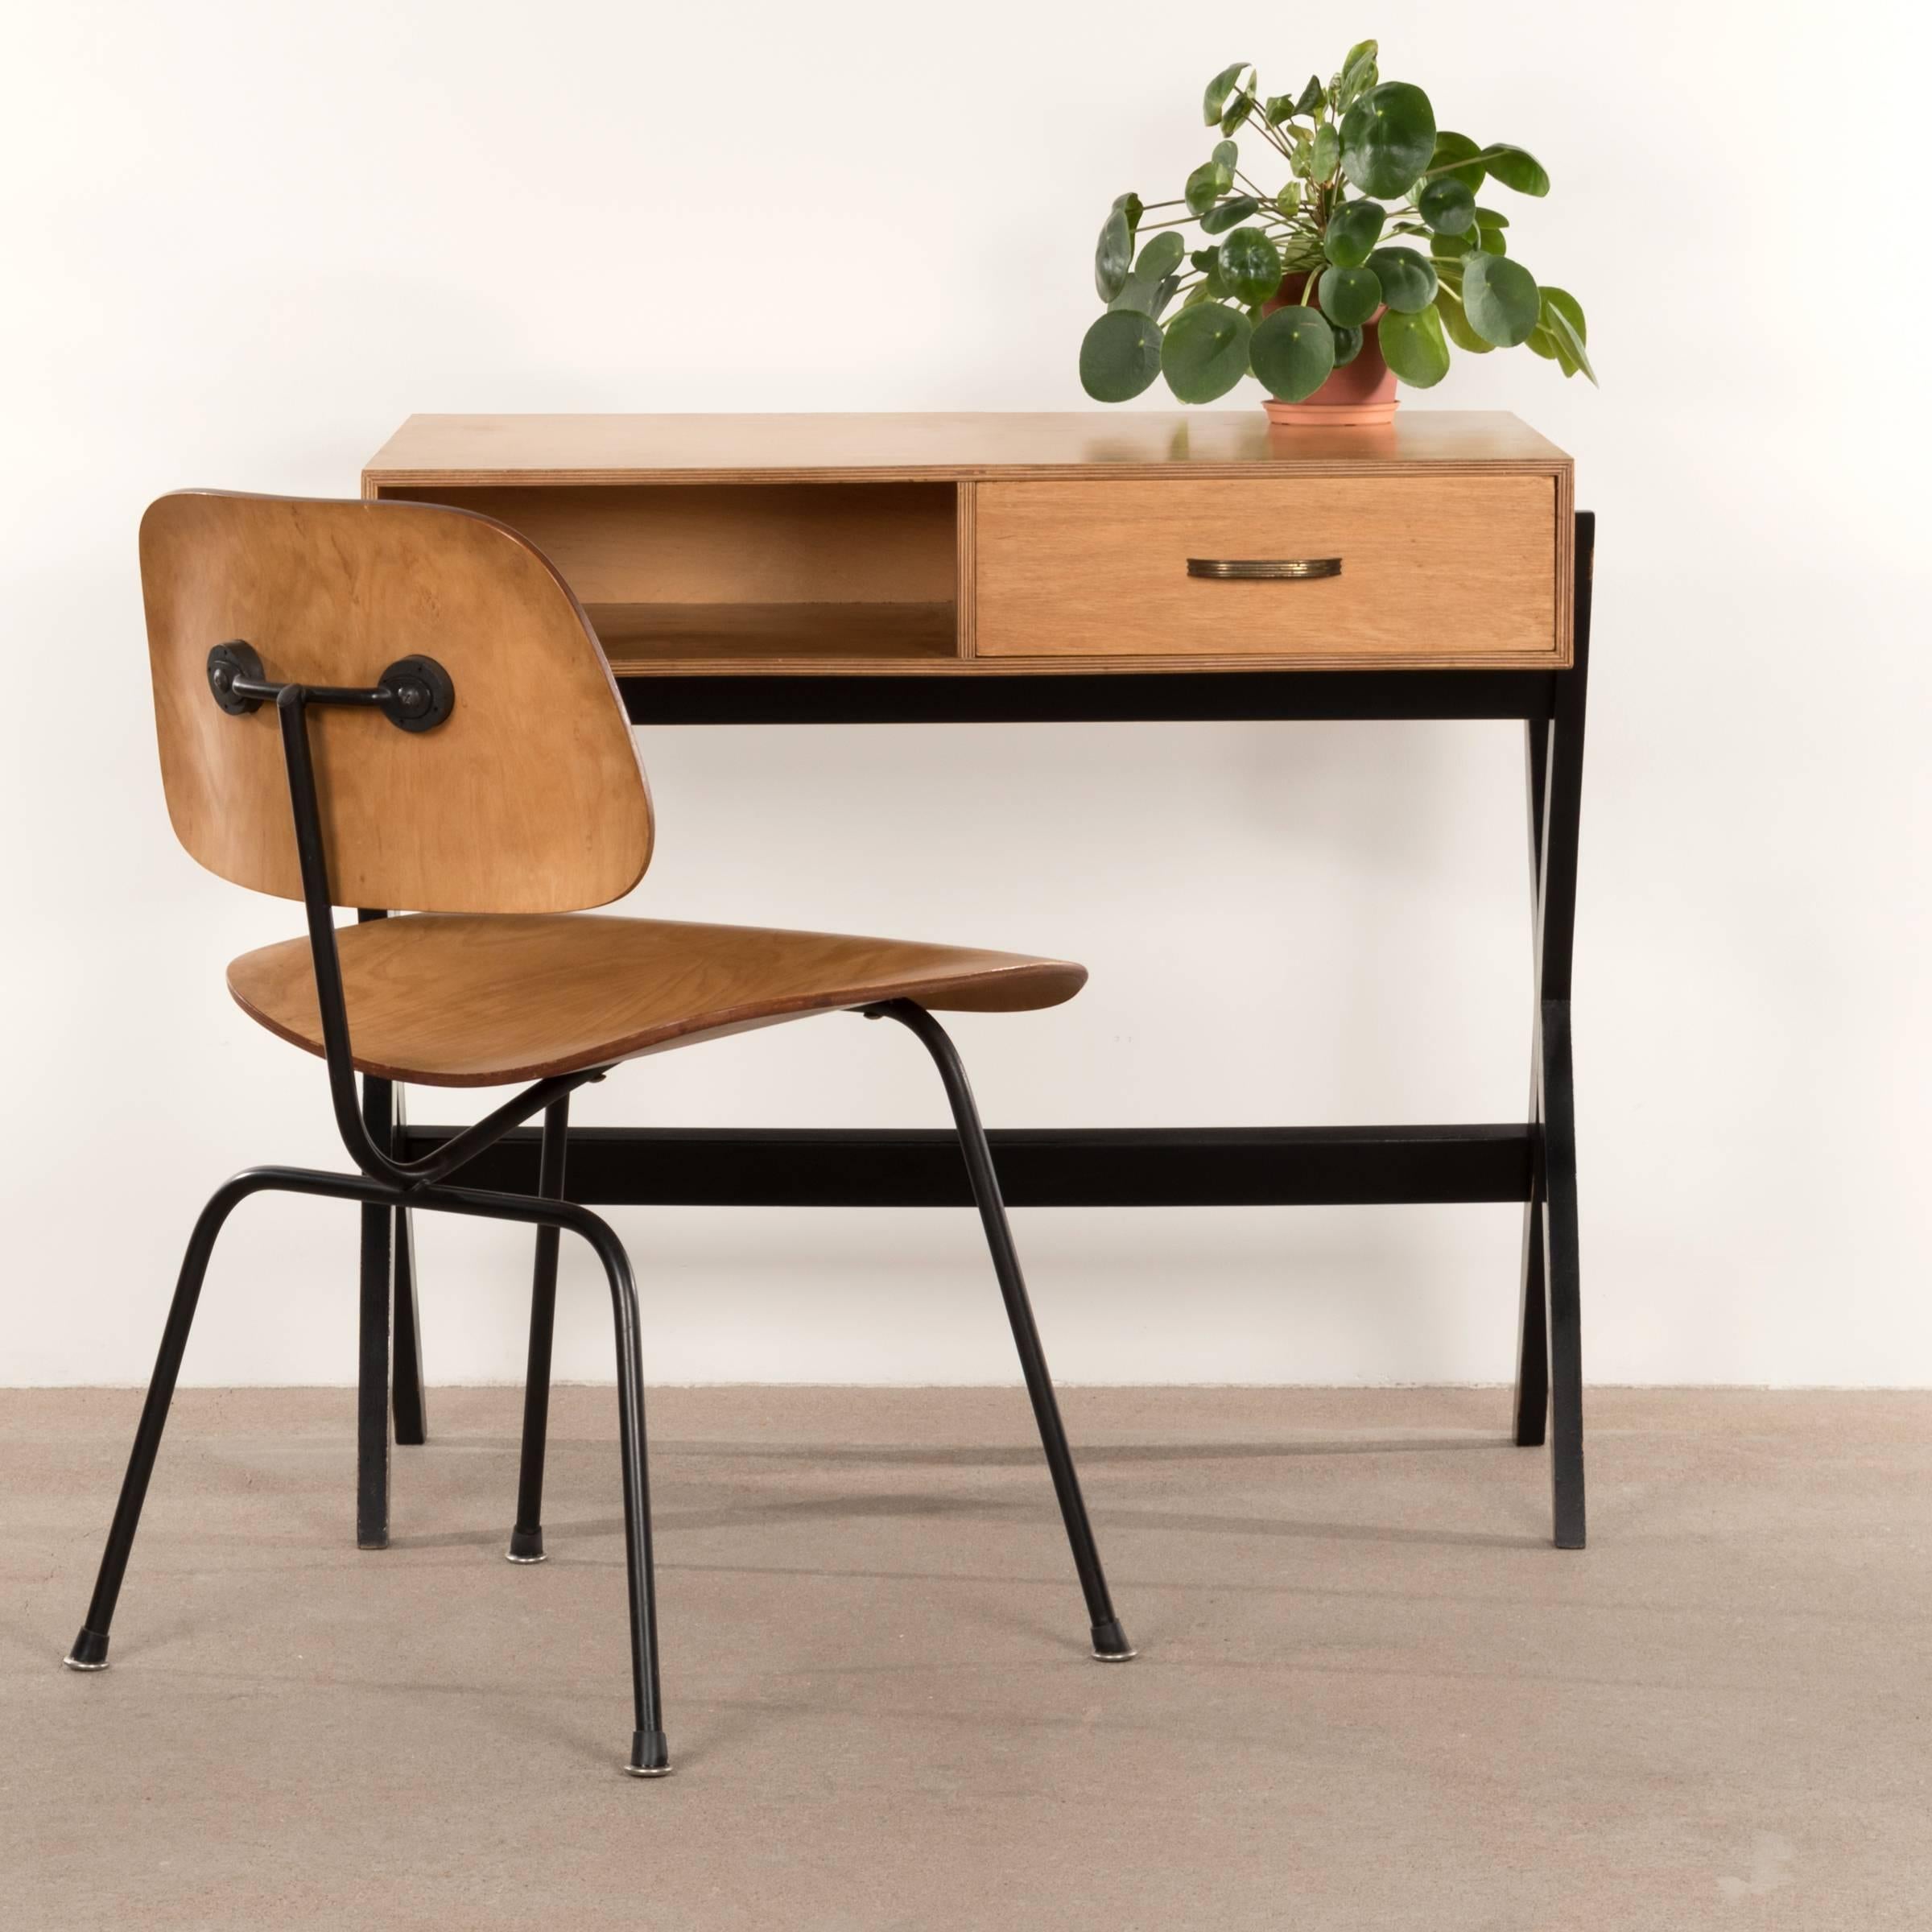 Mid-20th Century Coen de Vries Small Desk for Devo Netherlands, Vintage Dutch Design